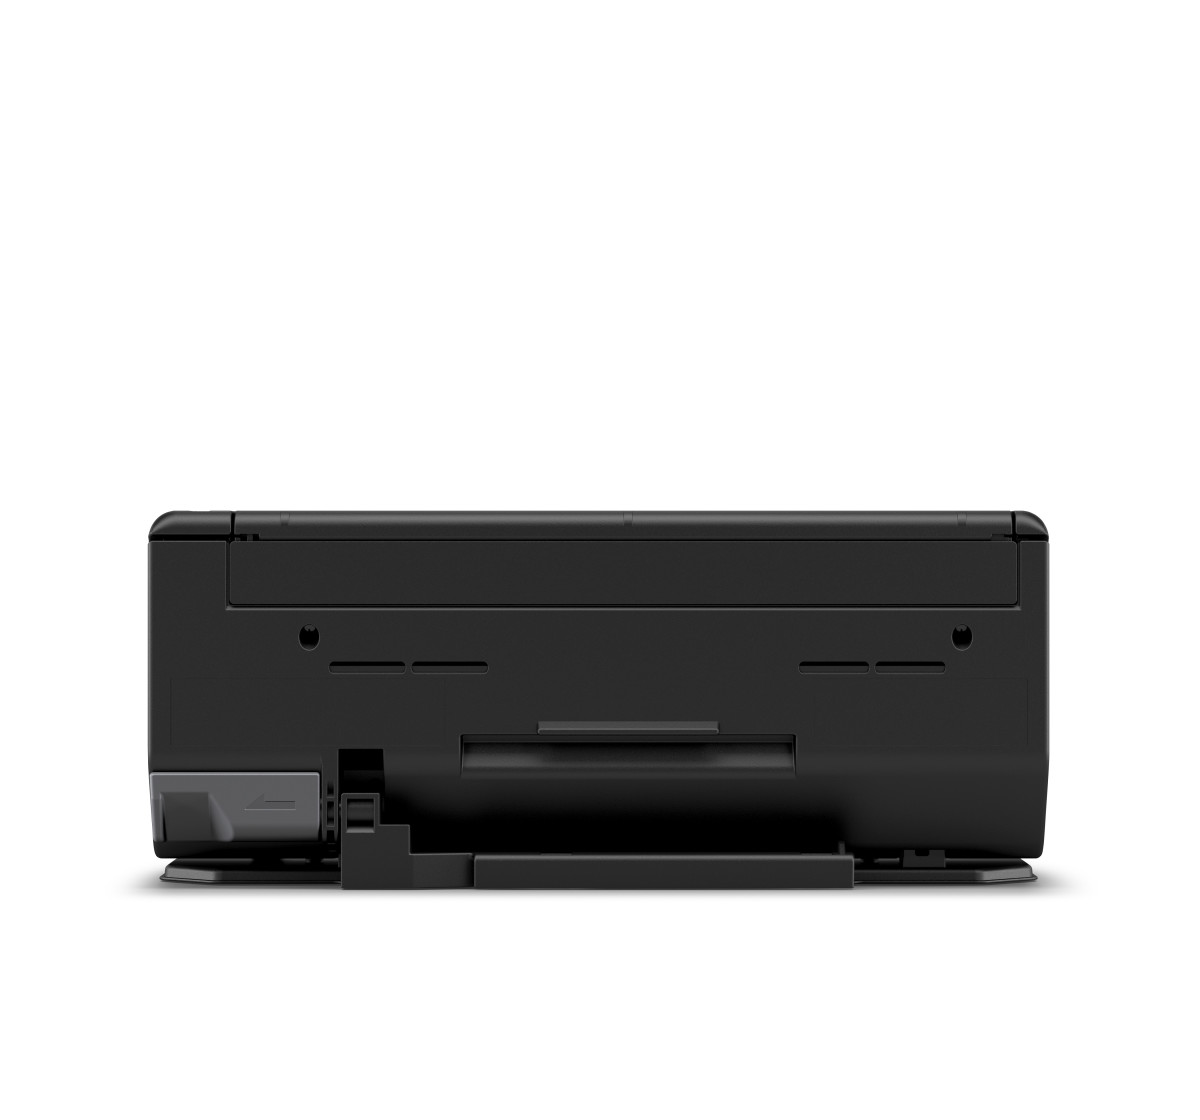 ES-C380W A4 Compact Desktop Scanner